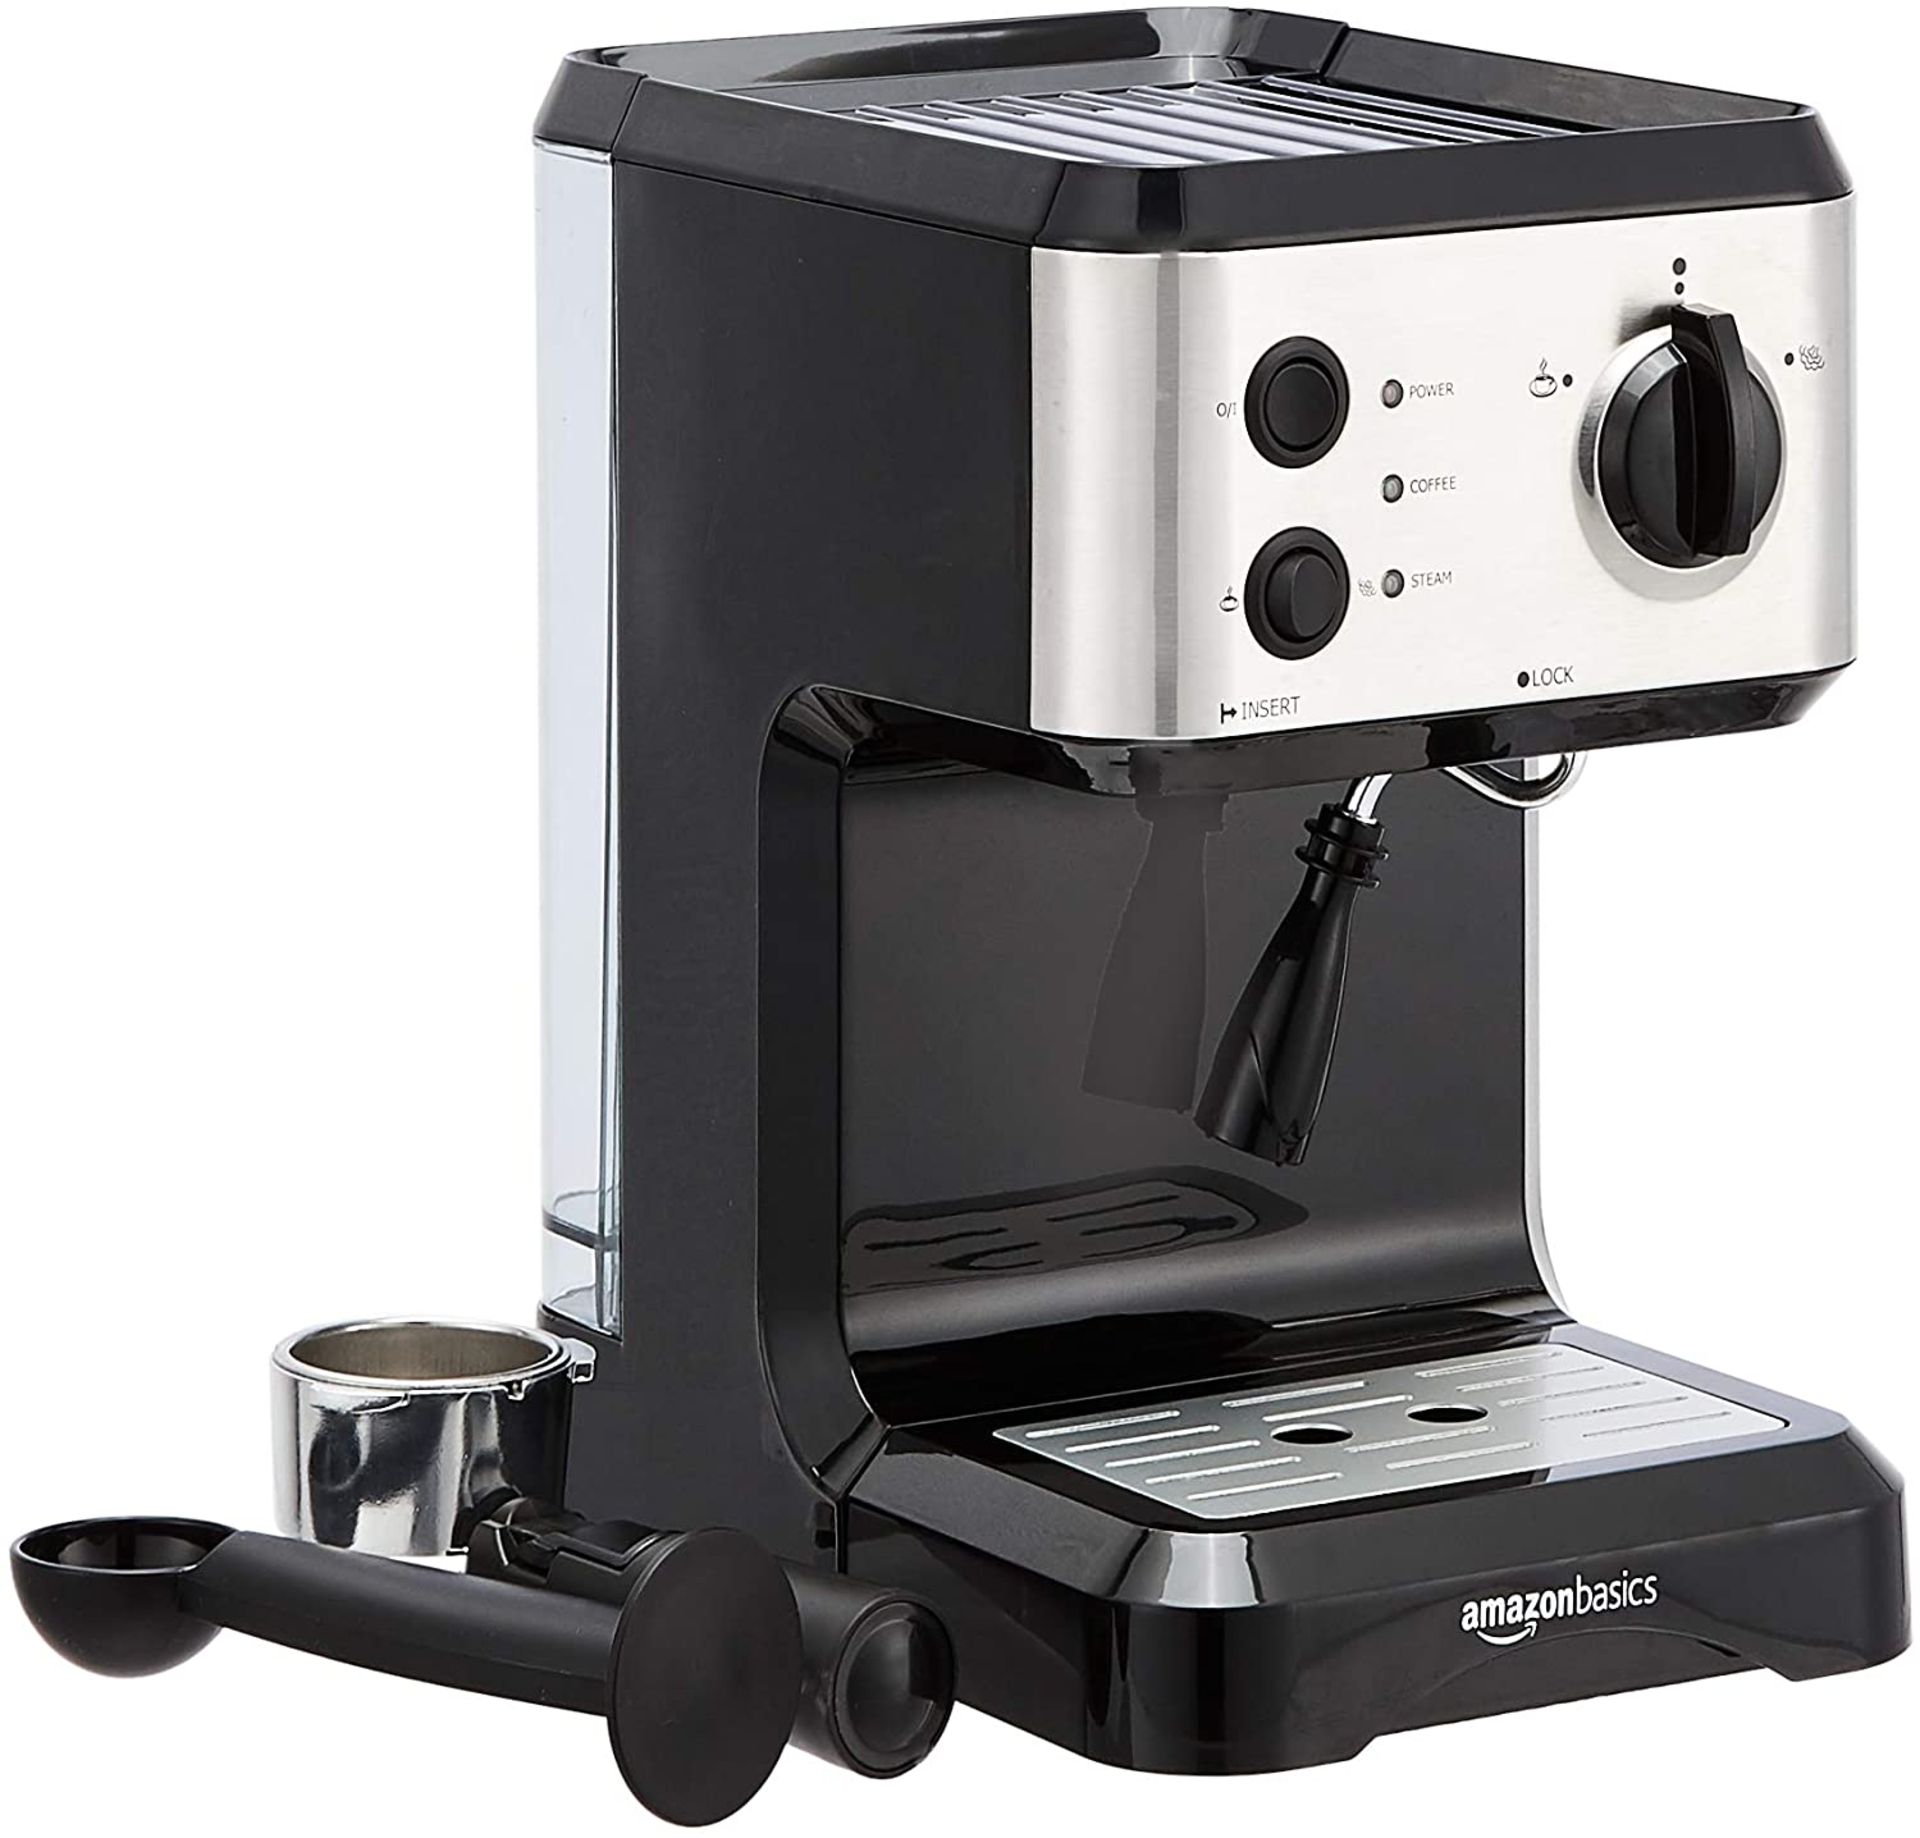 Amazon Basics Espresso Coffee Maker RRP £79.99